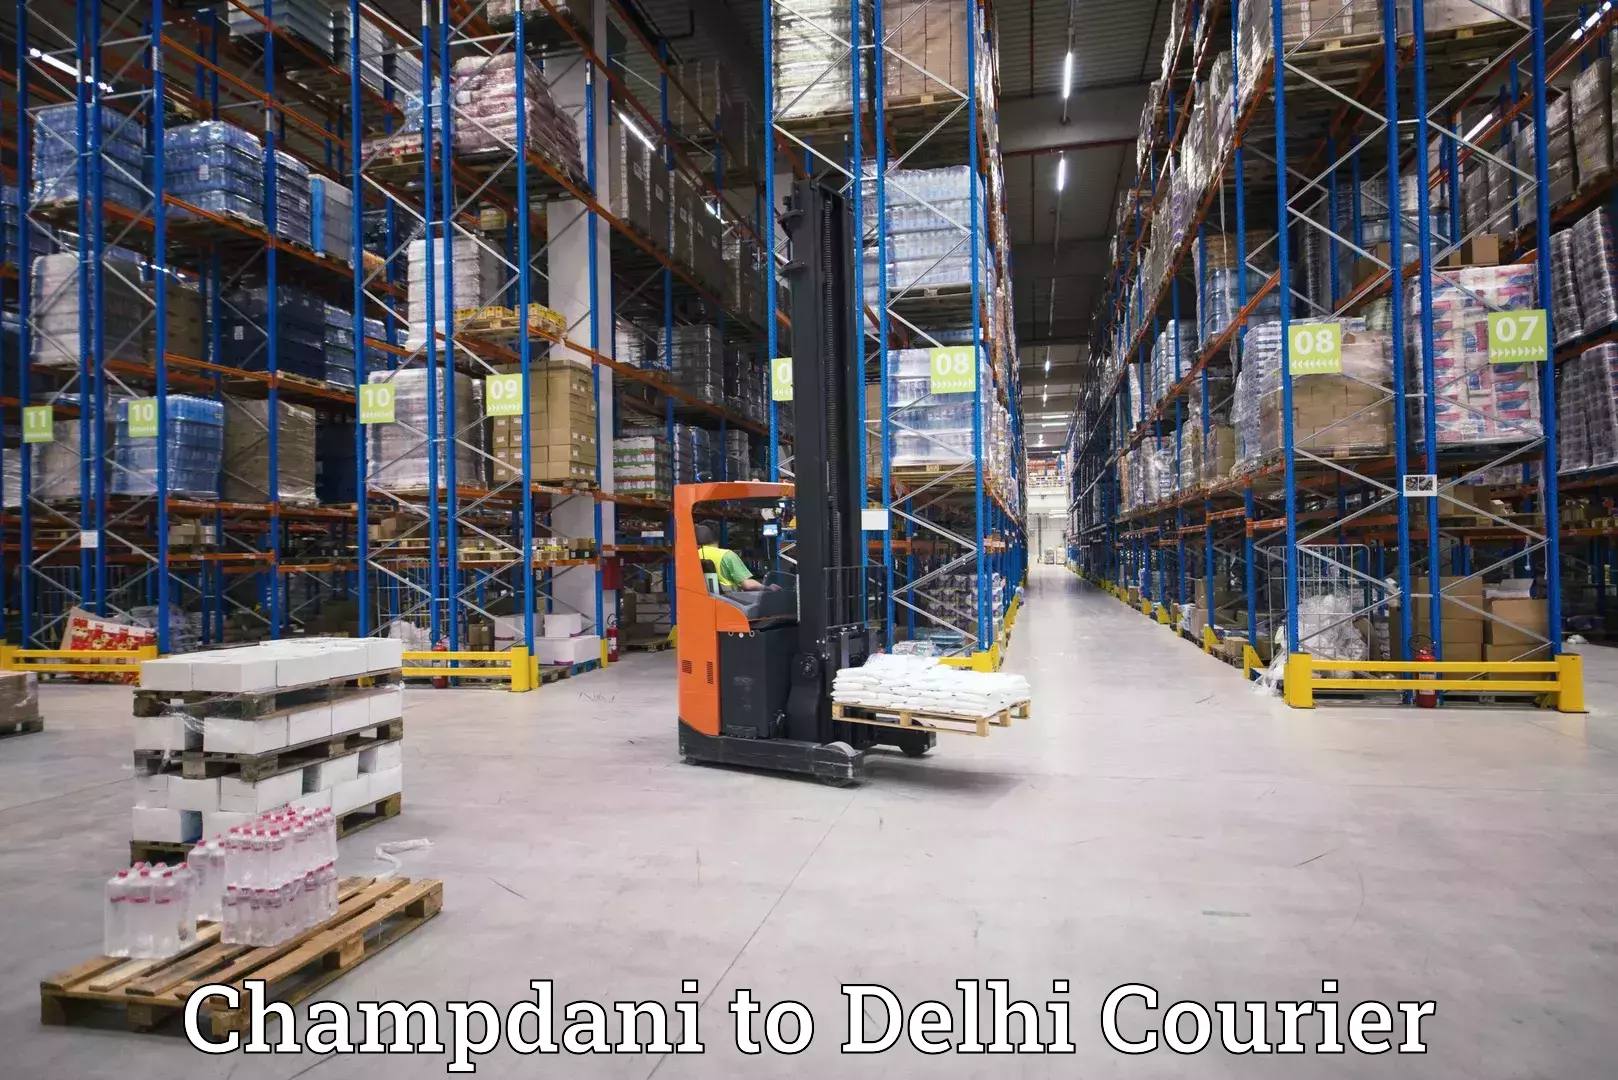 Digital courier platforms Champdani to Jawaharlal Nehru University New Delhi